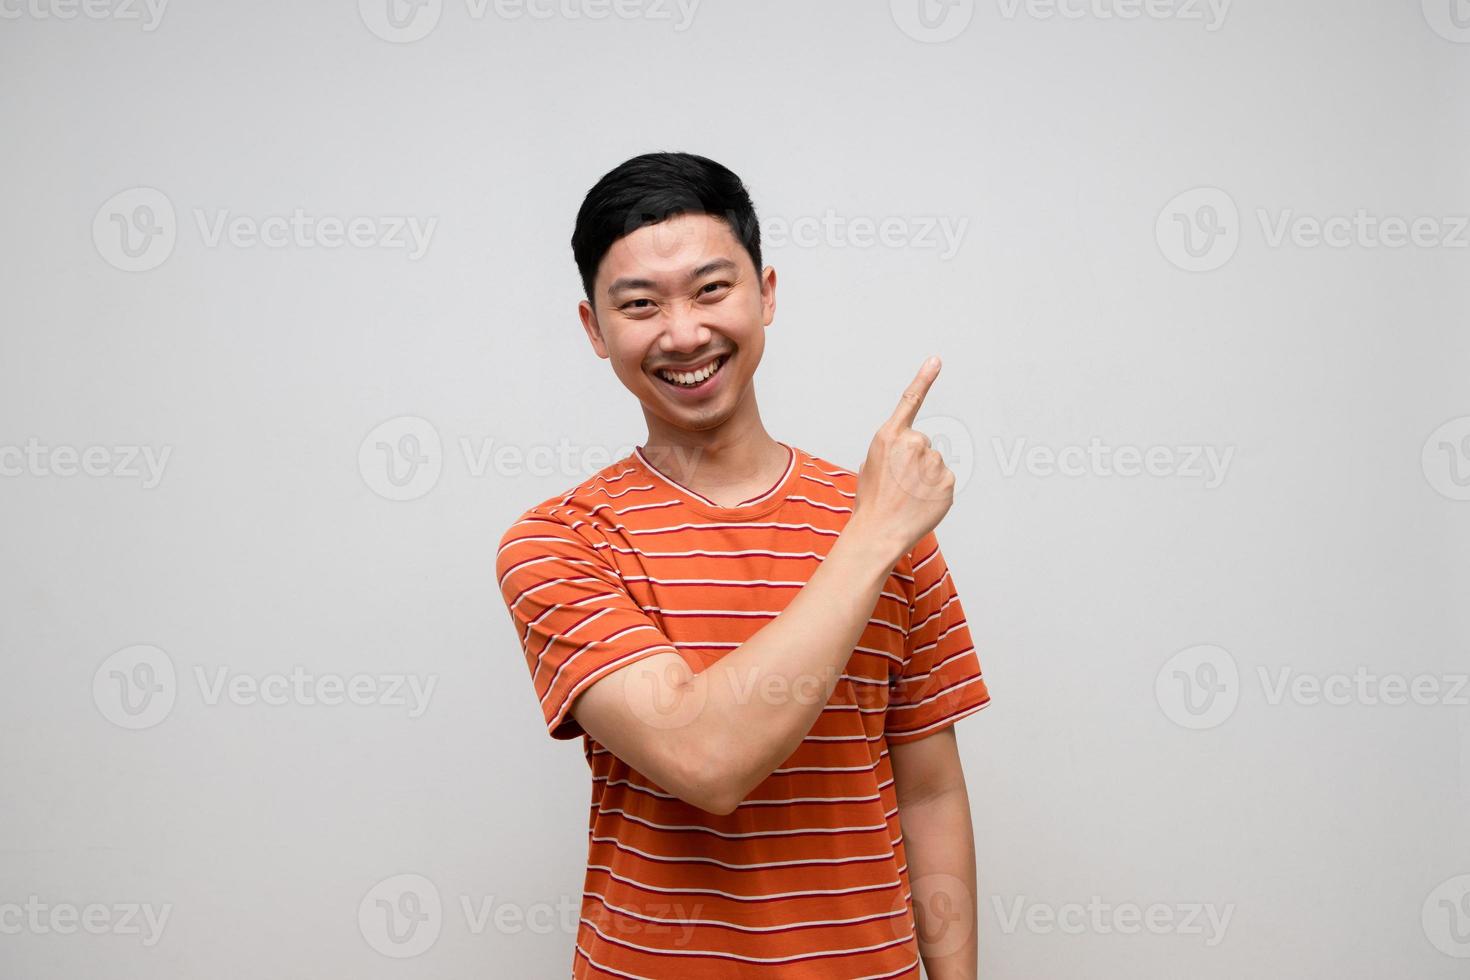 homem asiático positivo camisa listrada felicidade sorriso gesto apontar dedo isolado foto